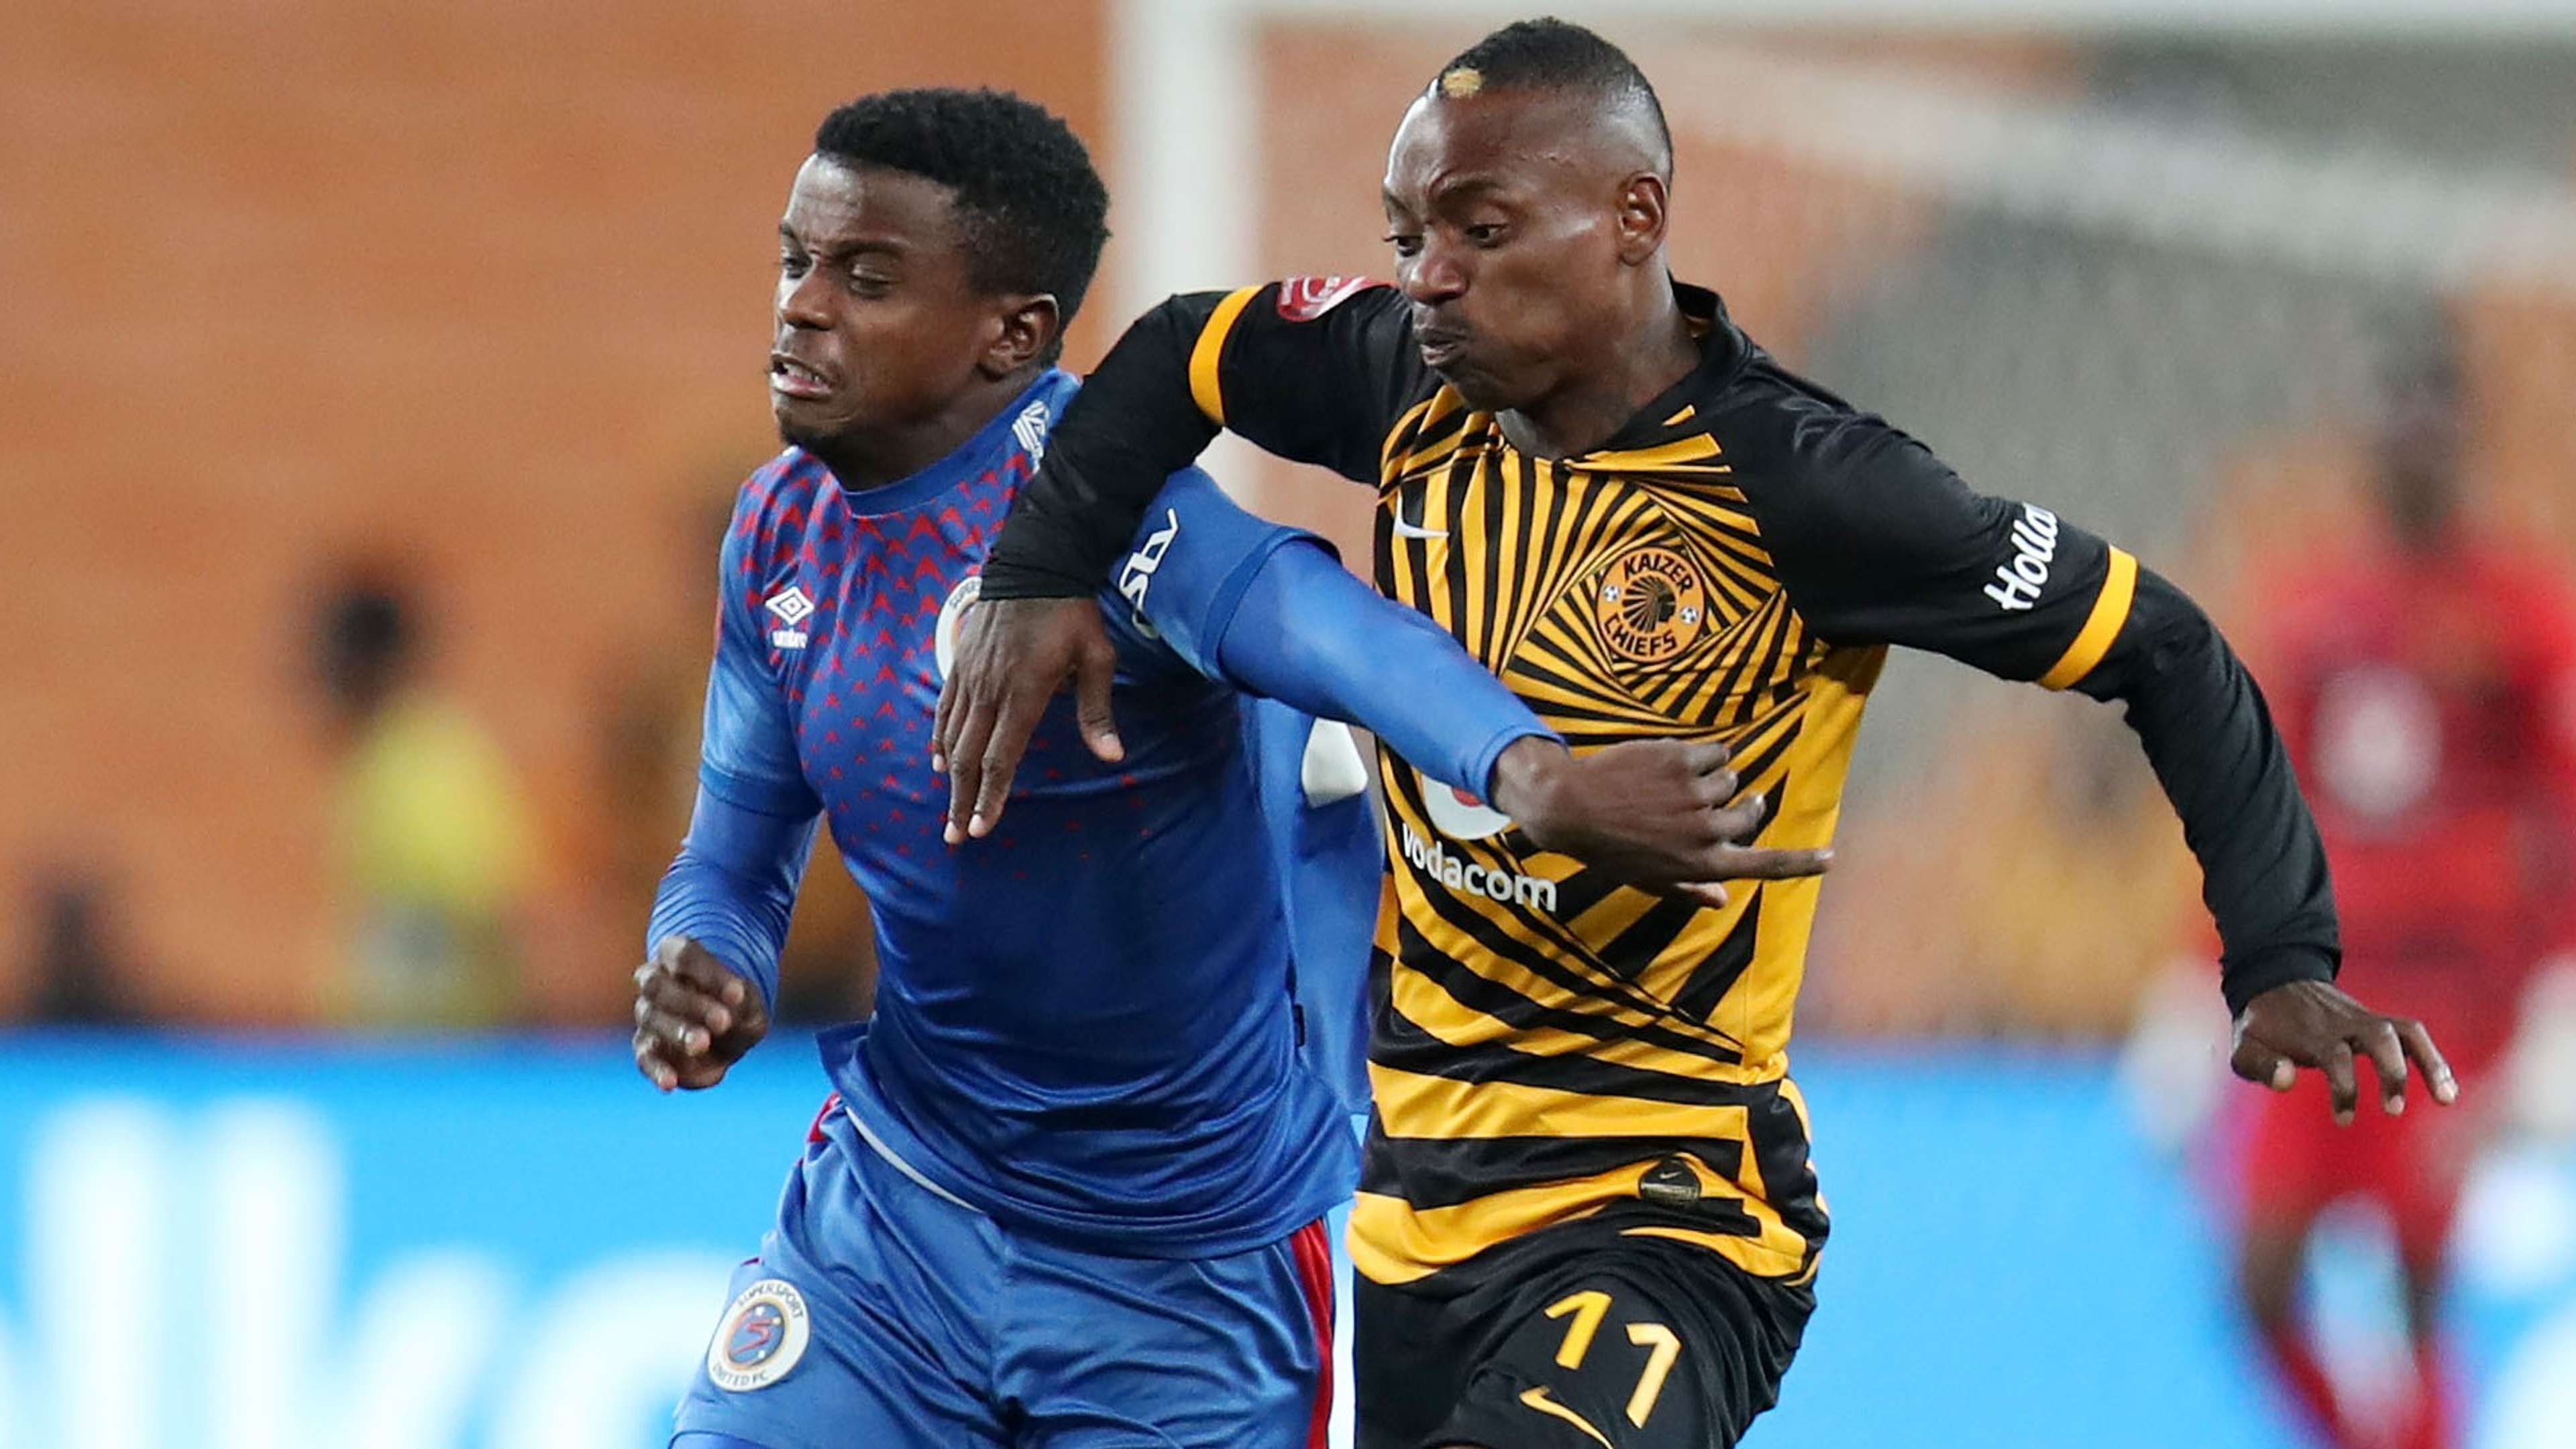 Teboho Mokoena, SuperSport United & Khama Billiat, Kaizer Chiefs, September 2019